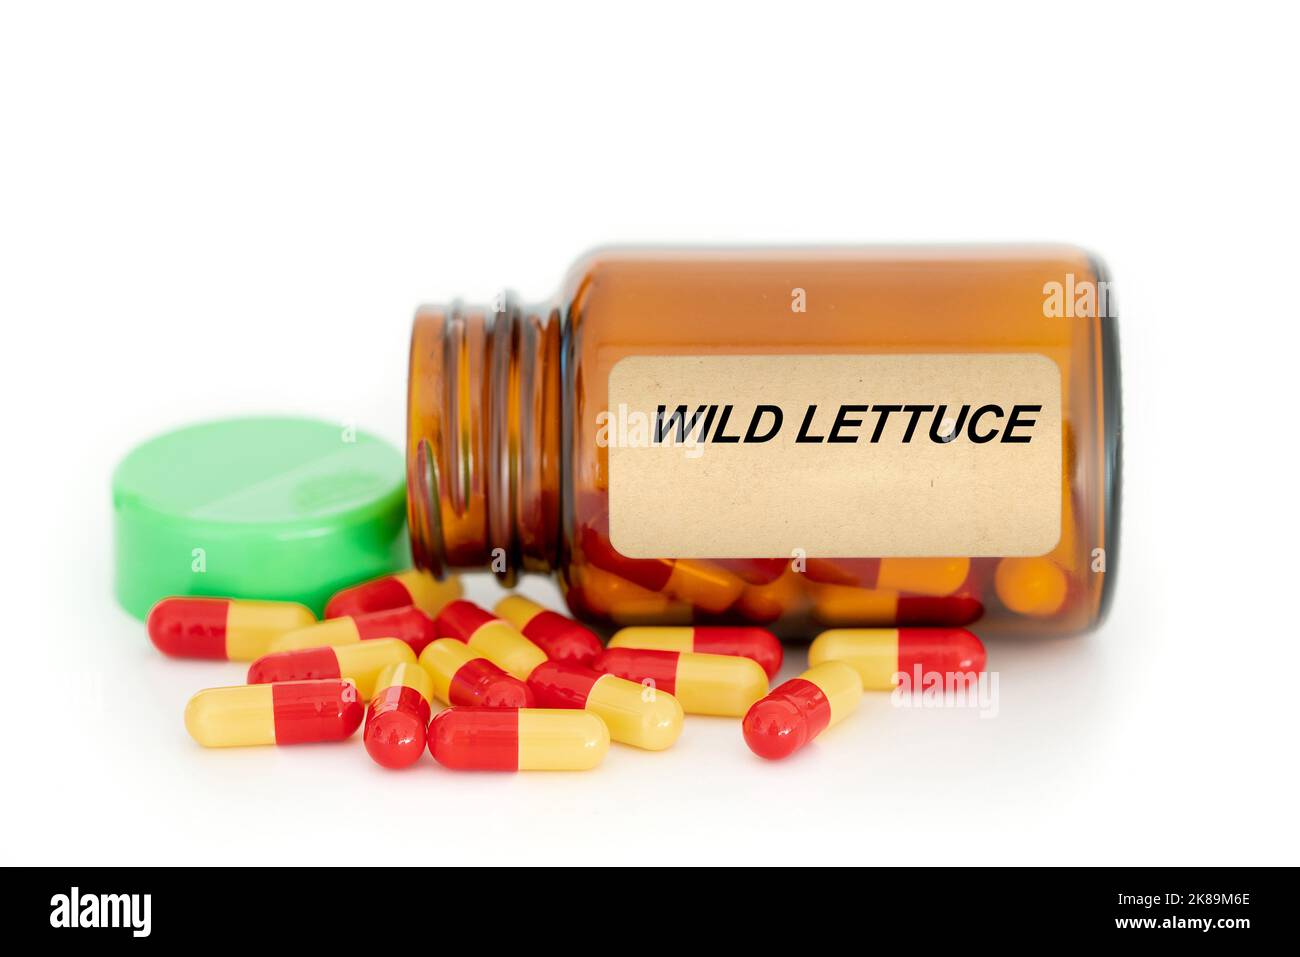 Wild lettuce herbal medicine, conceptual image Stock Photo